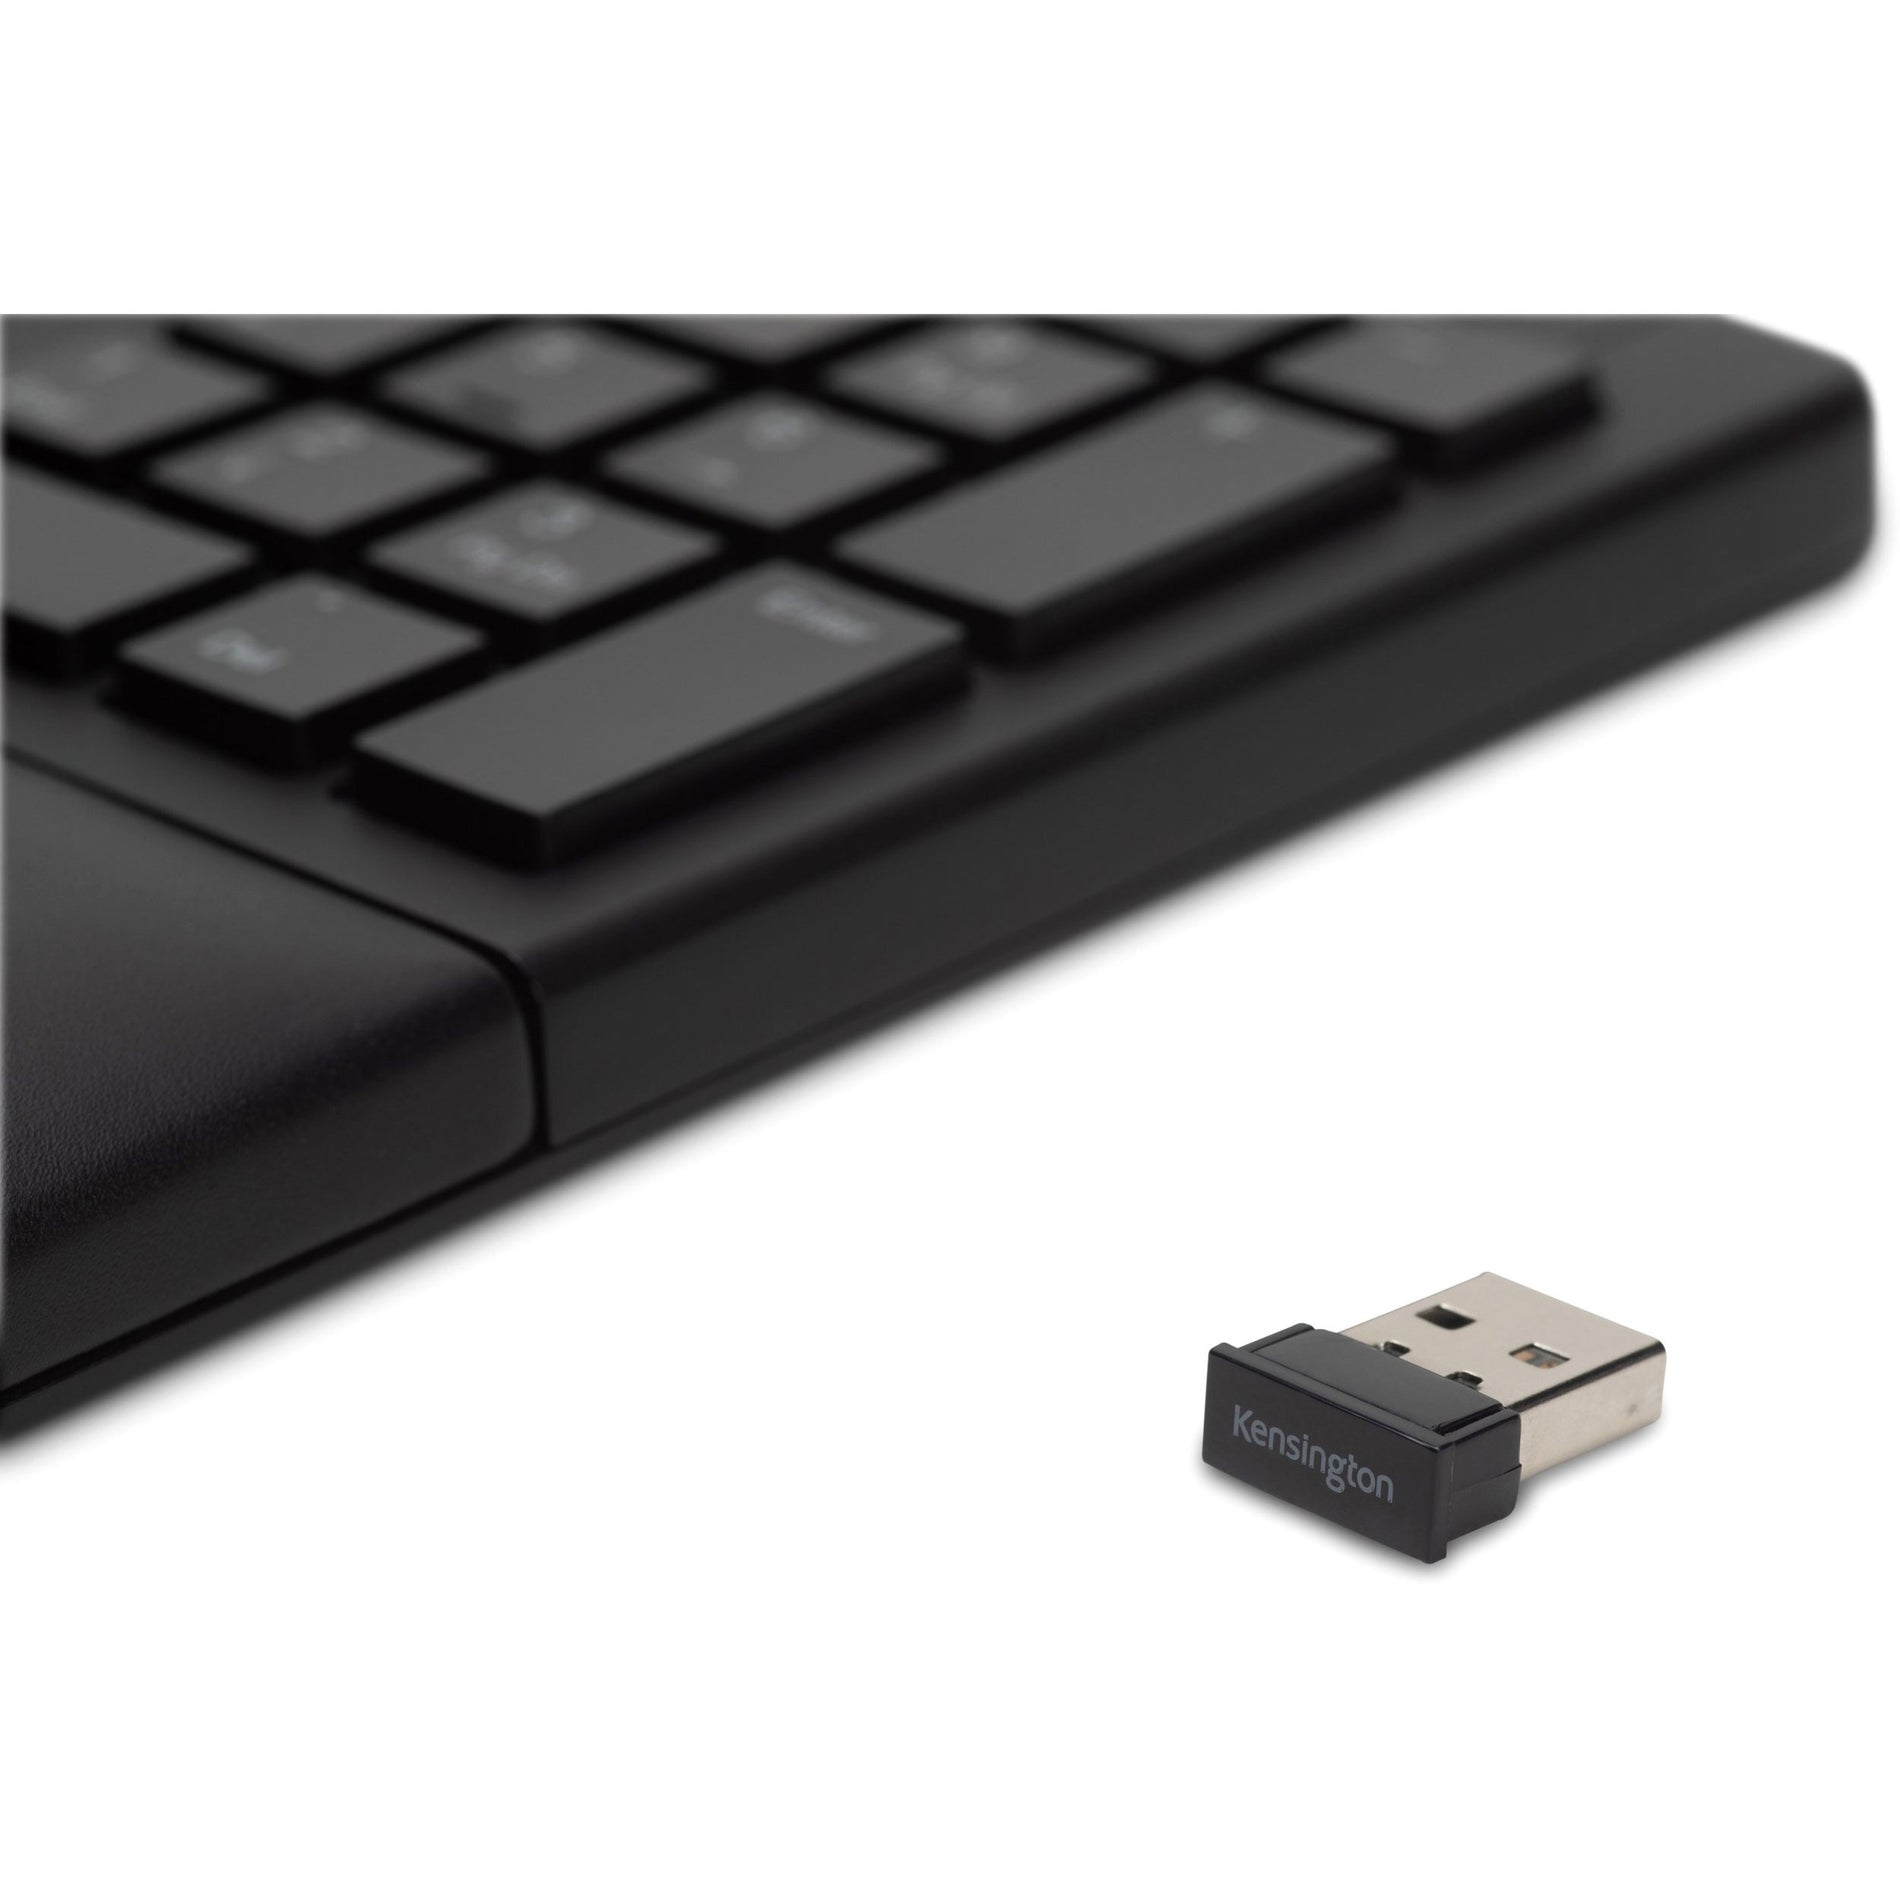 Kensington K75401US Pro Fit Ergo Wireless Keyboard-Black, 2.4 GHz Bluetooth/RF, USB Interface